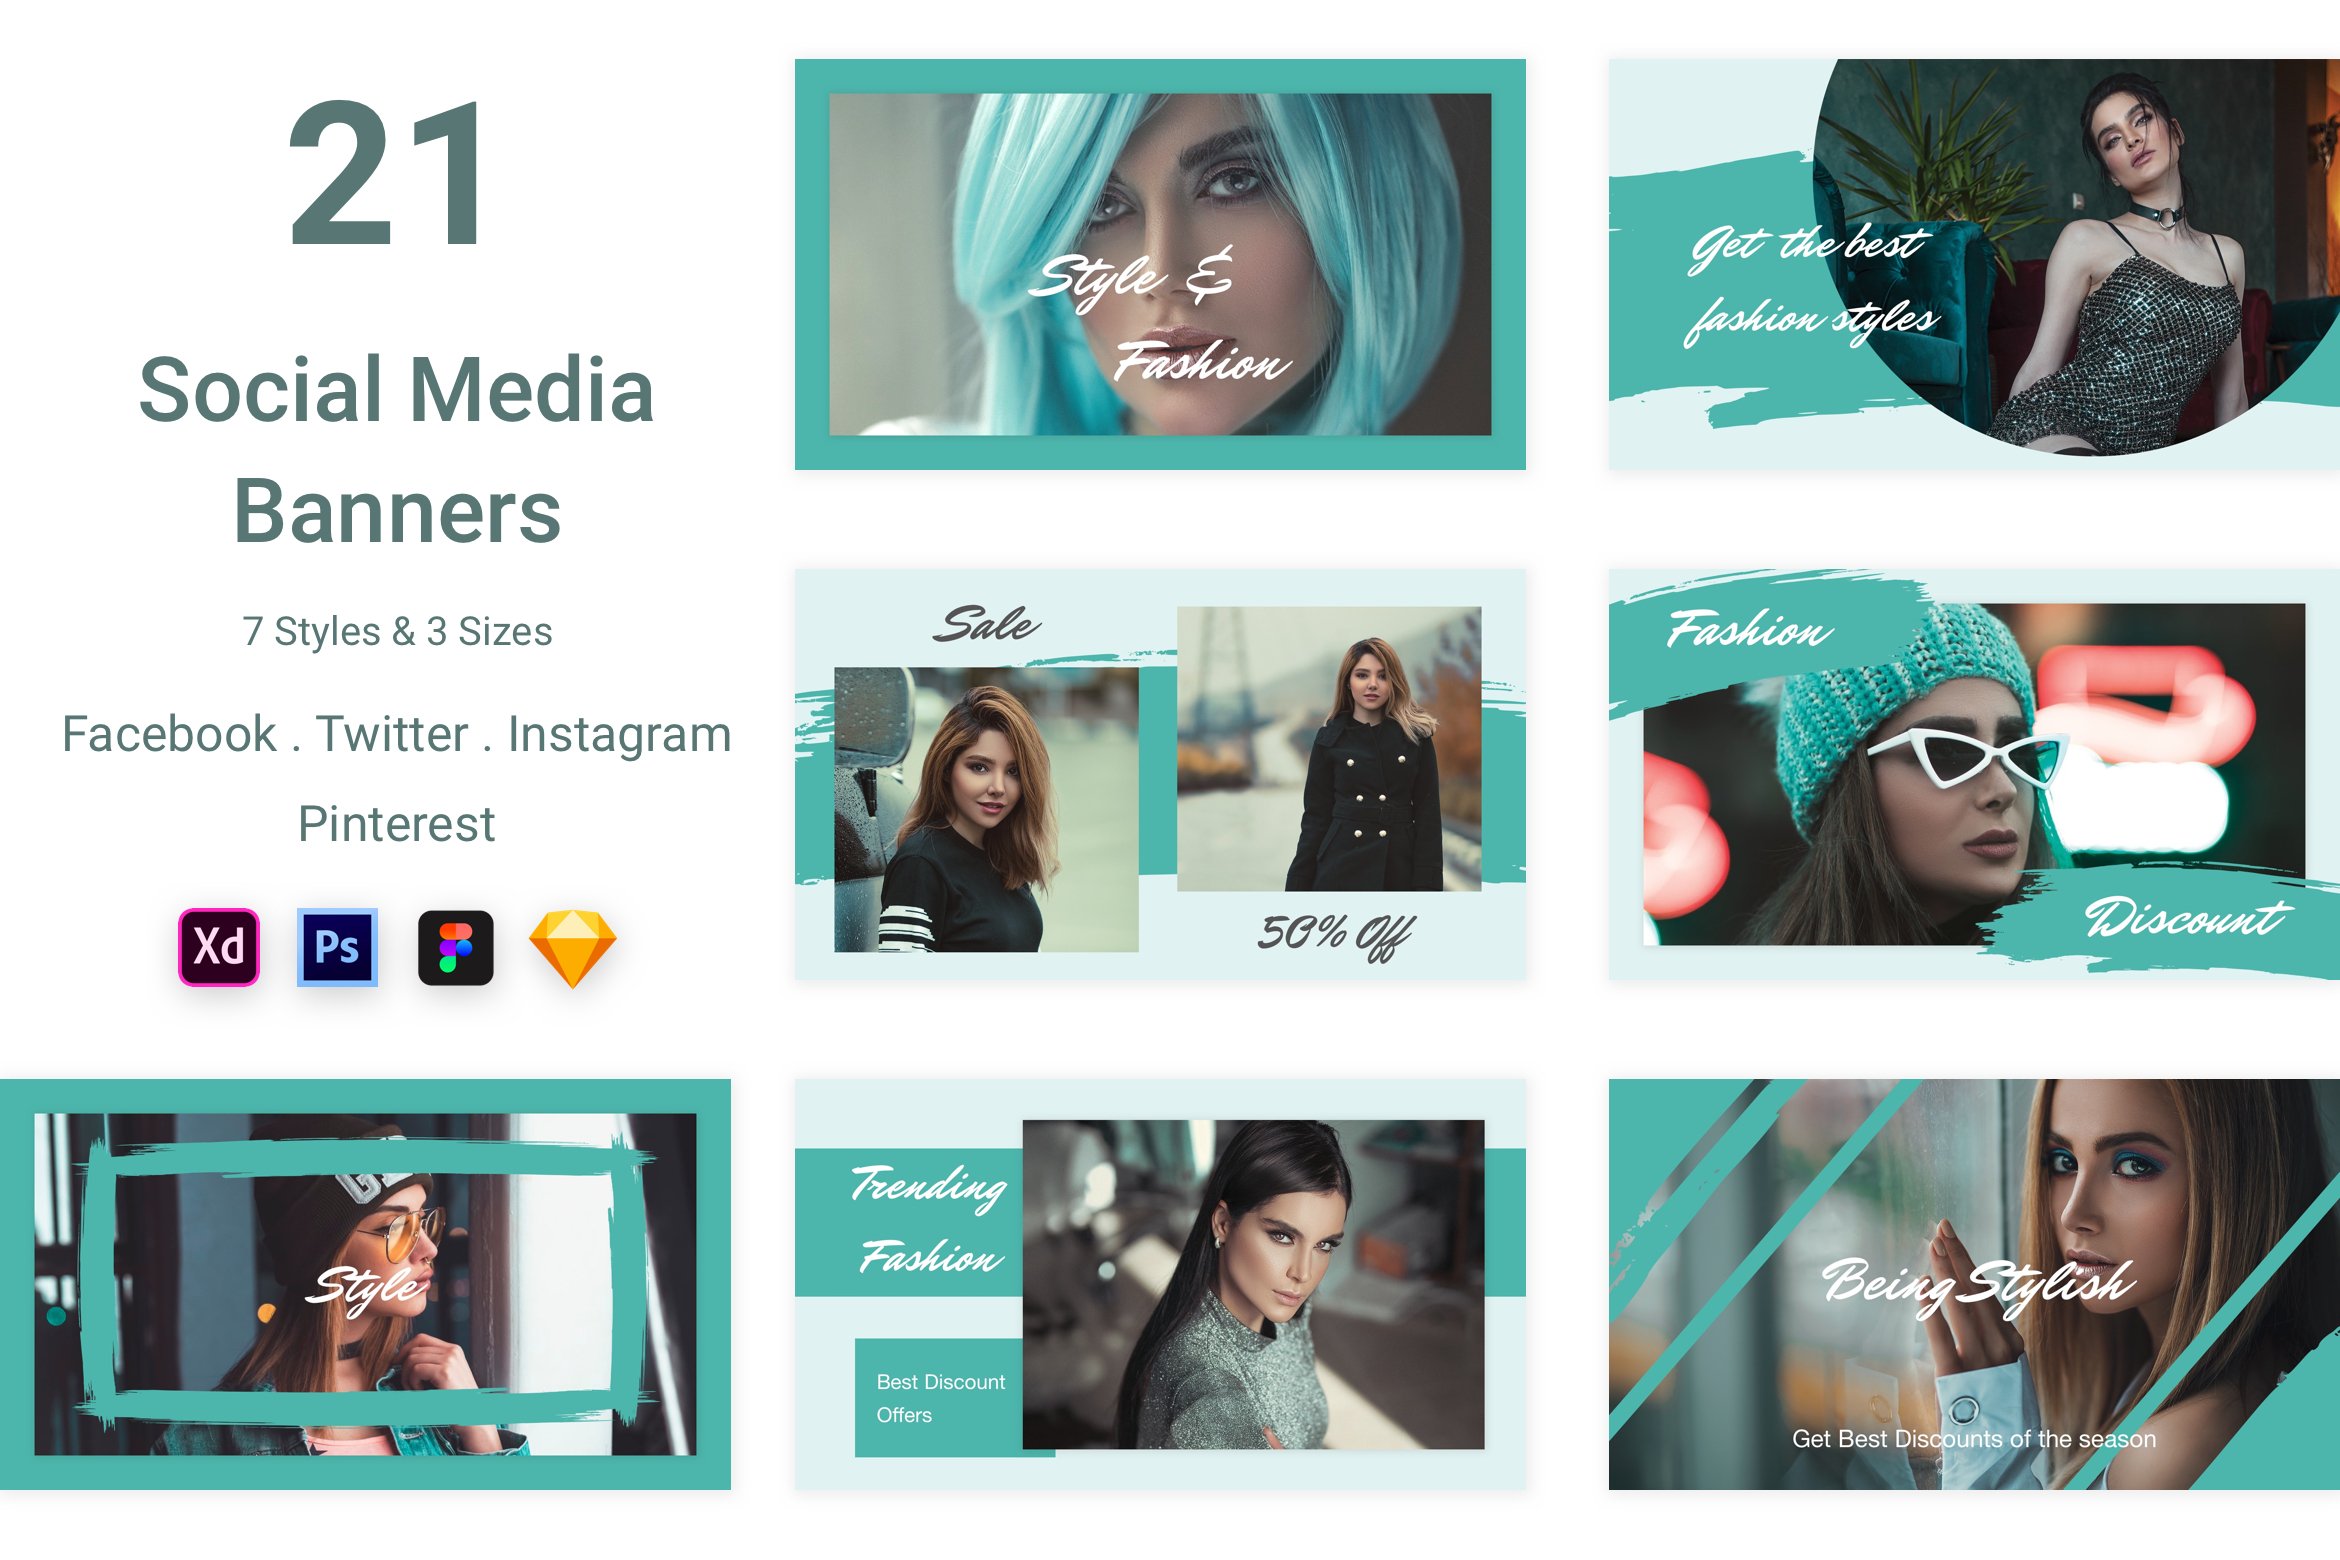 21 Social Media Banners Kit (Vol. 4) cover image.